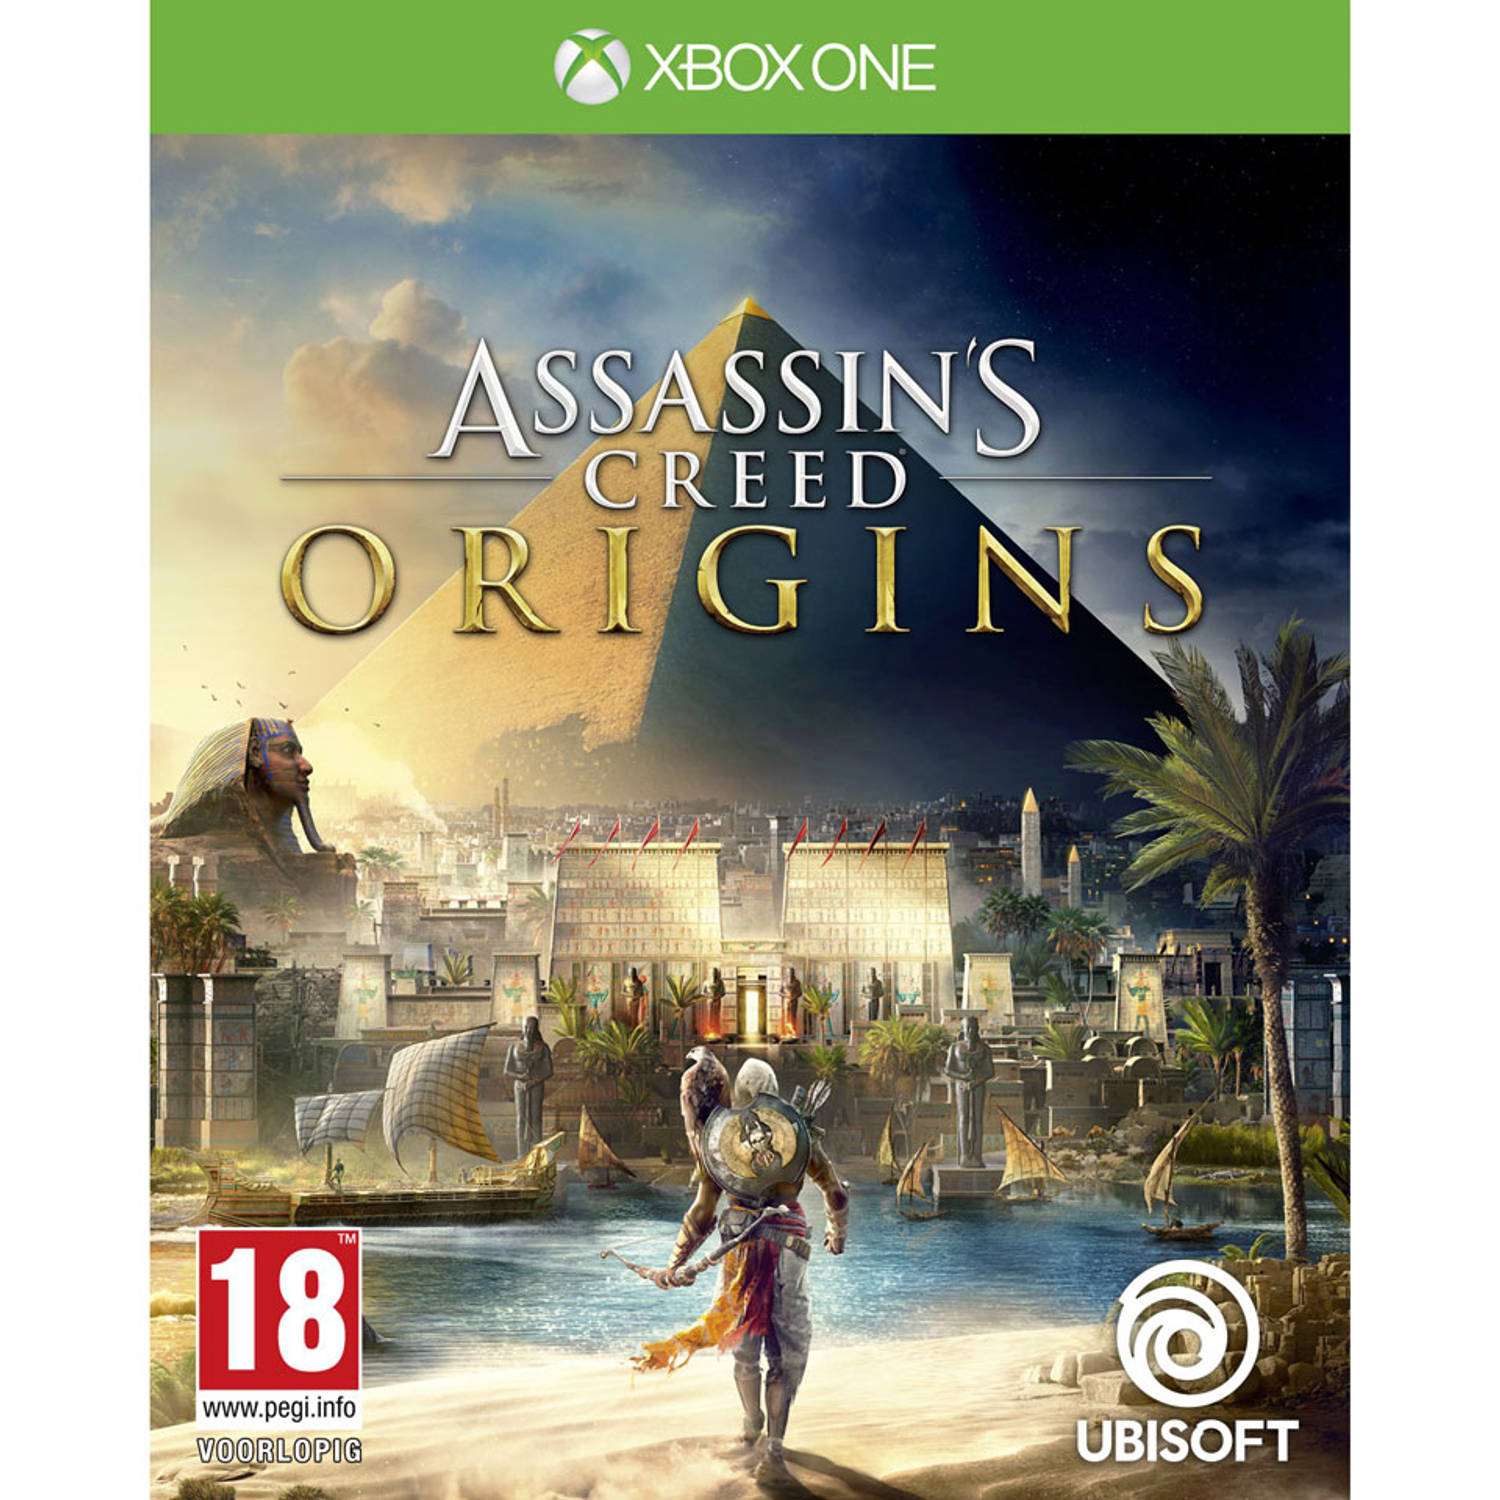 Xbox One Assassin's Creed Origins